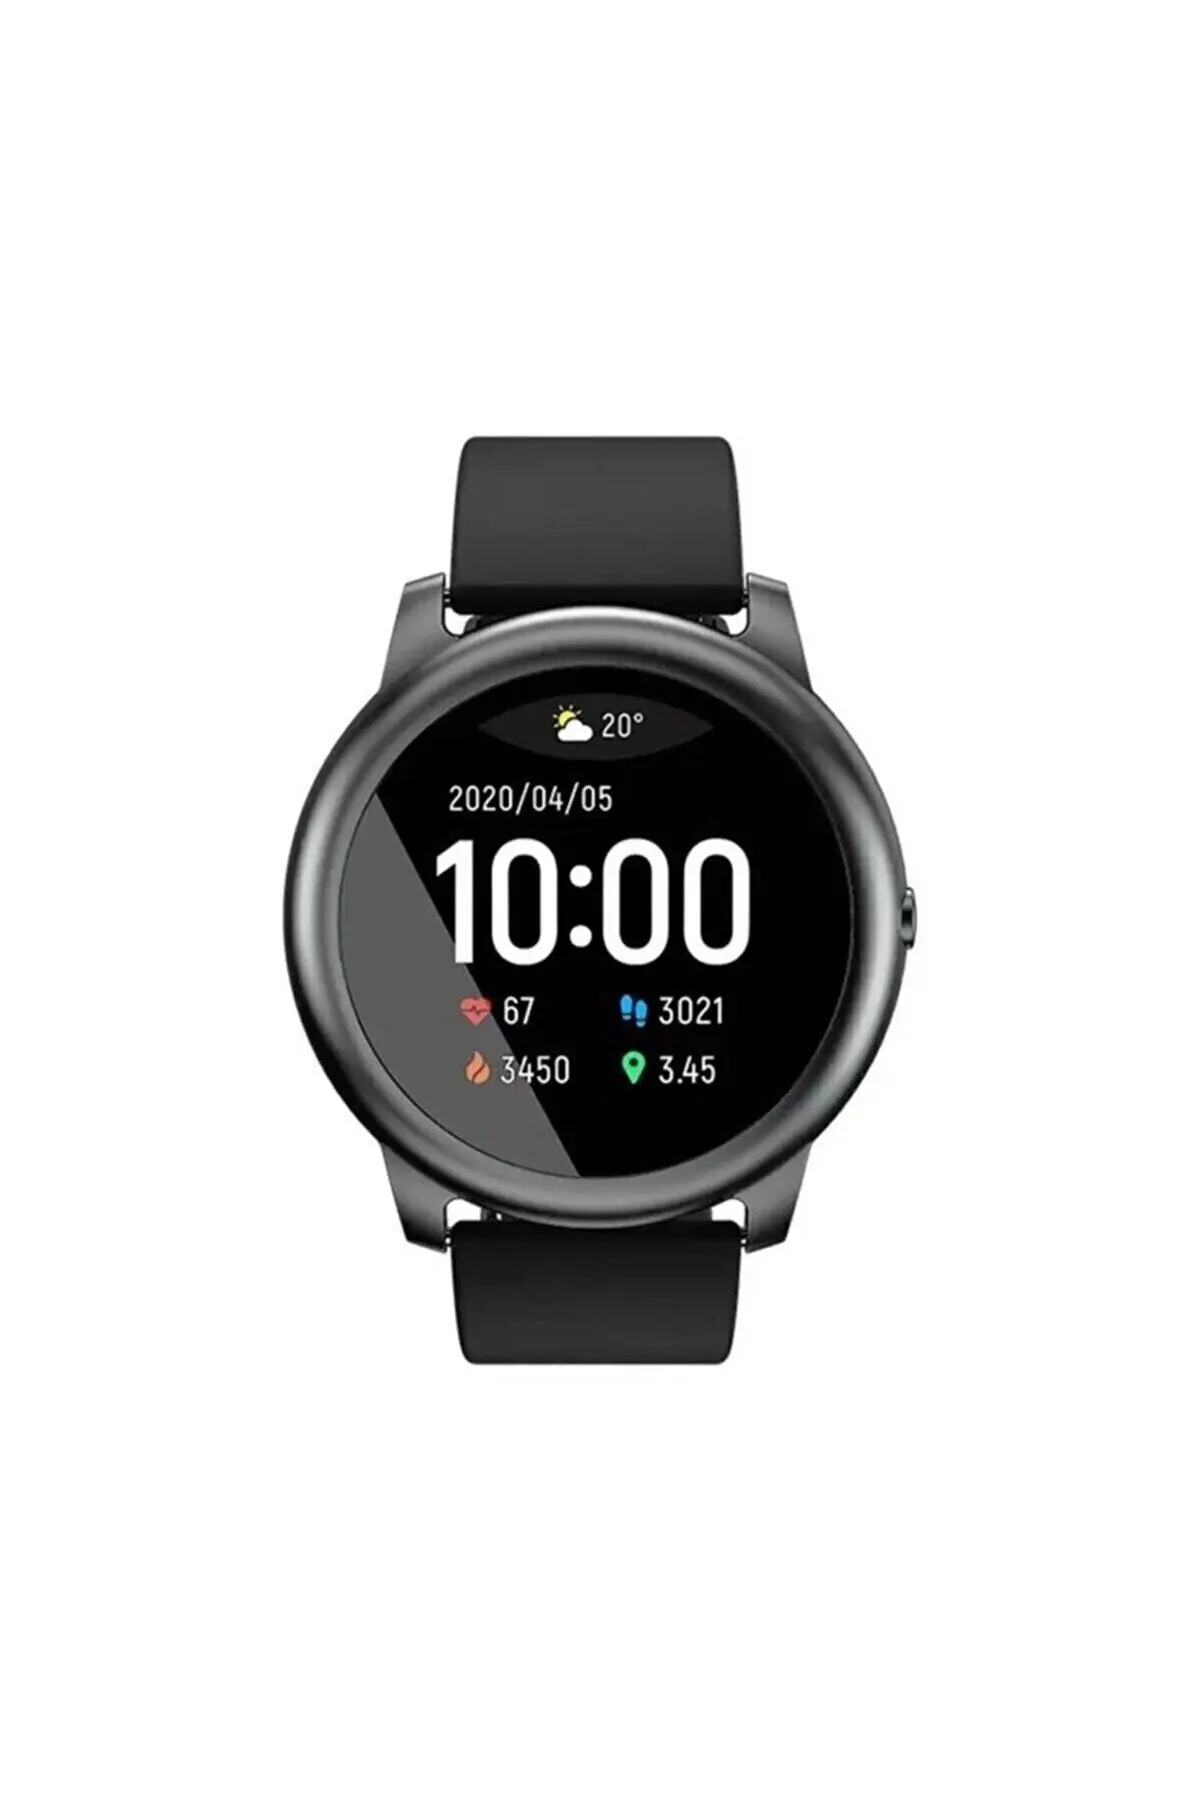 

Solar Ls05 Smart Watch Global Version Wristwatch, IP67 Waterproof, Fitness Tracker, Clock, Music Control, Heart Rate, Step Count